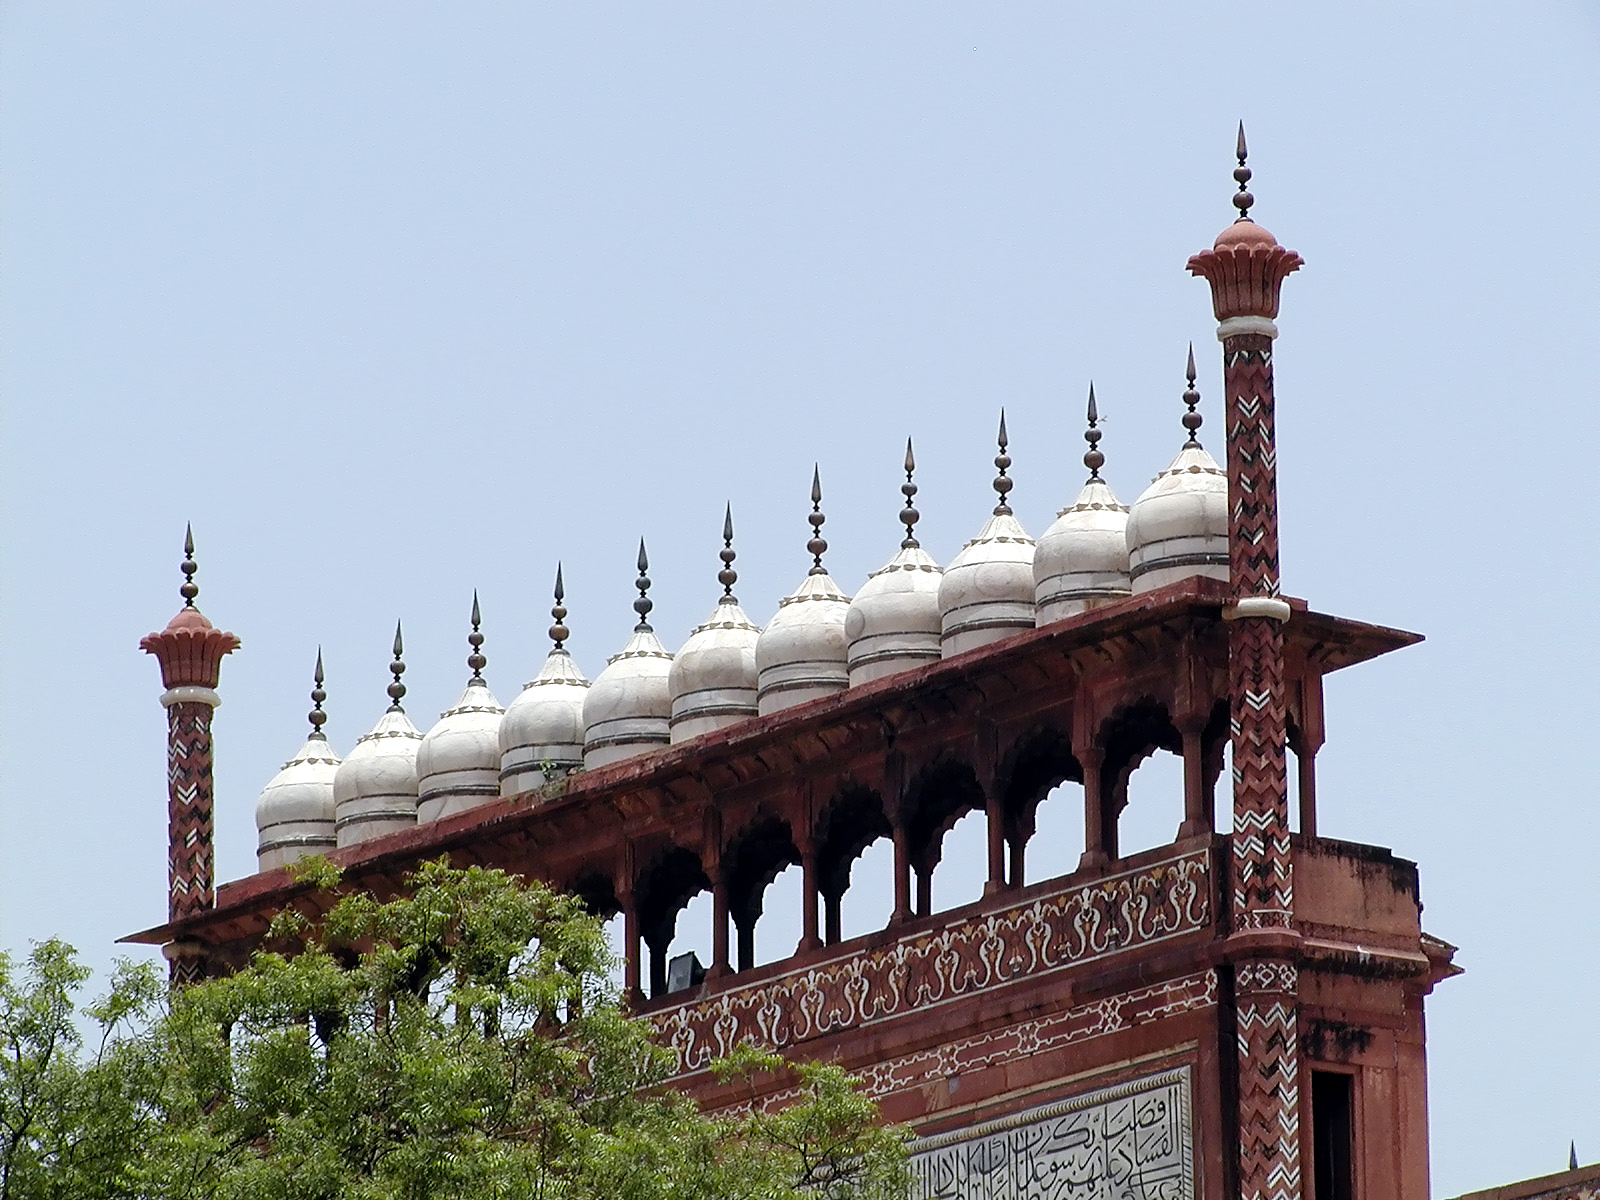 10-Jun-2001 11:55 - Agra - The Taj Mahal - Small domes above the main gateway